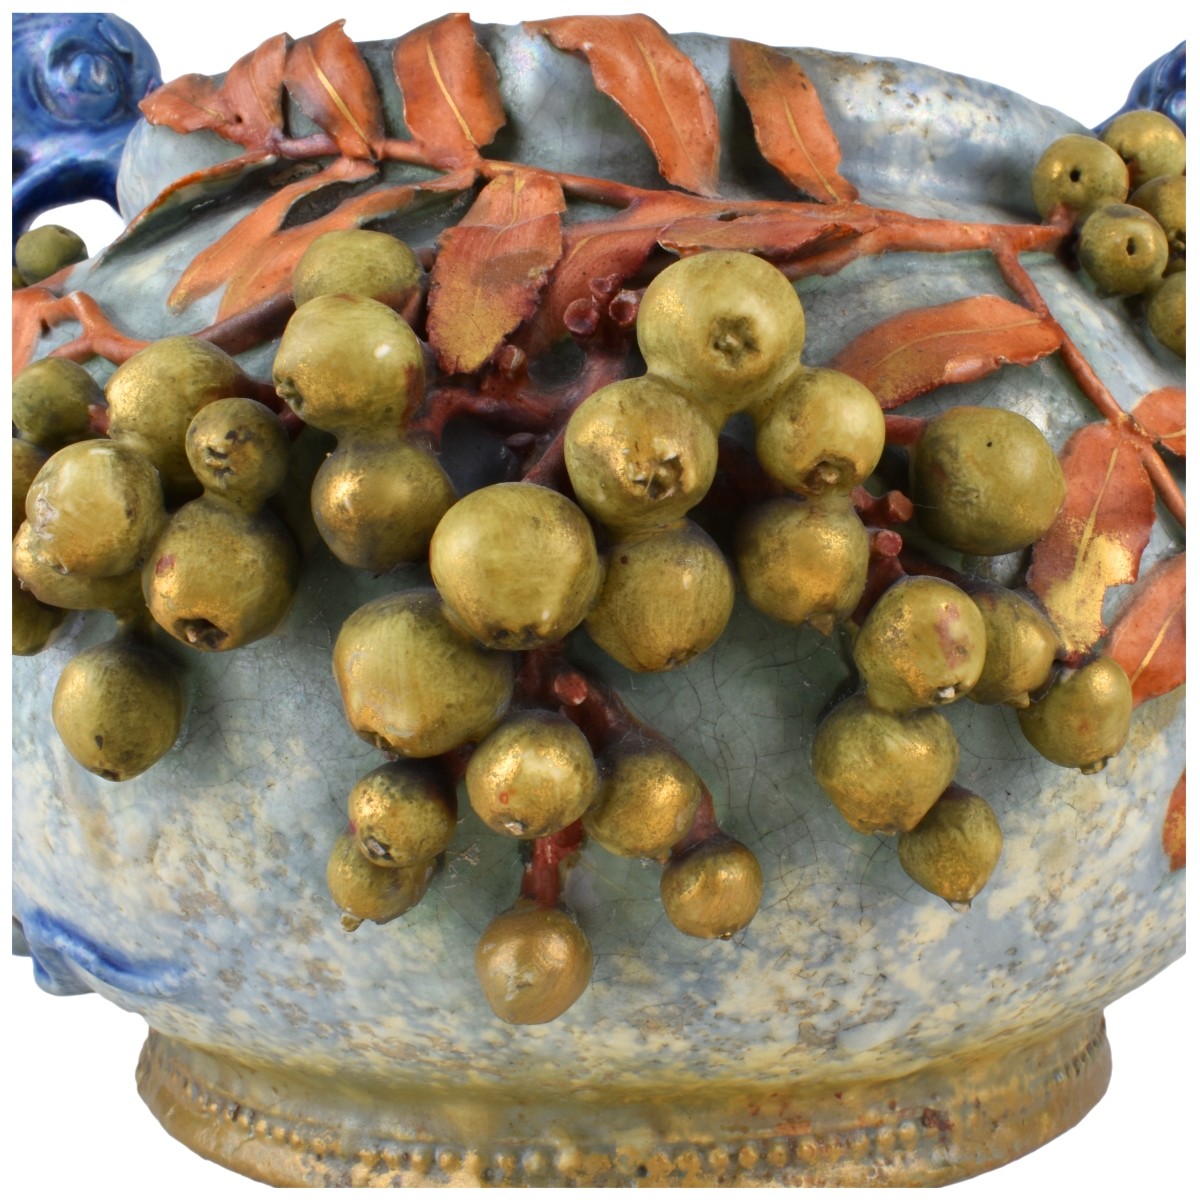 Art Nouveau Amphora Handled Edda Pottery Bowl